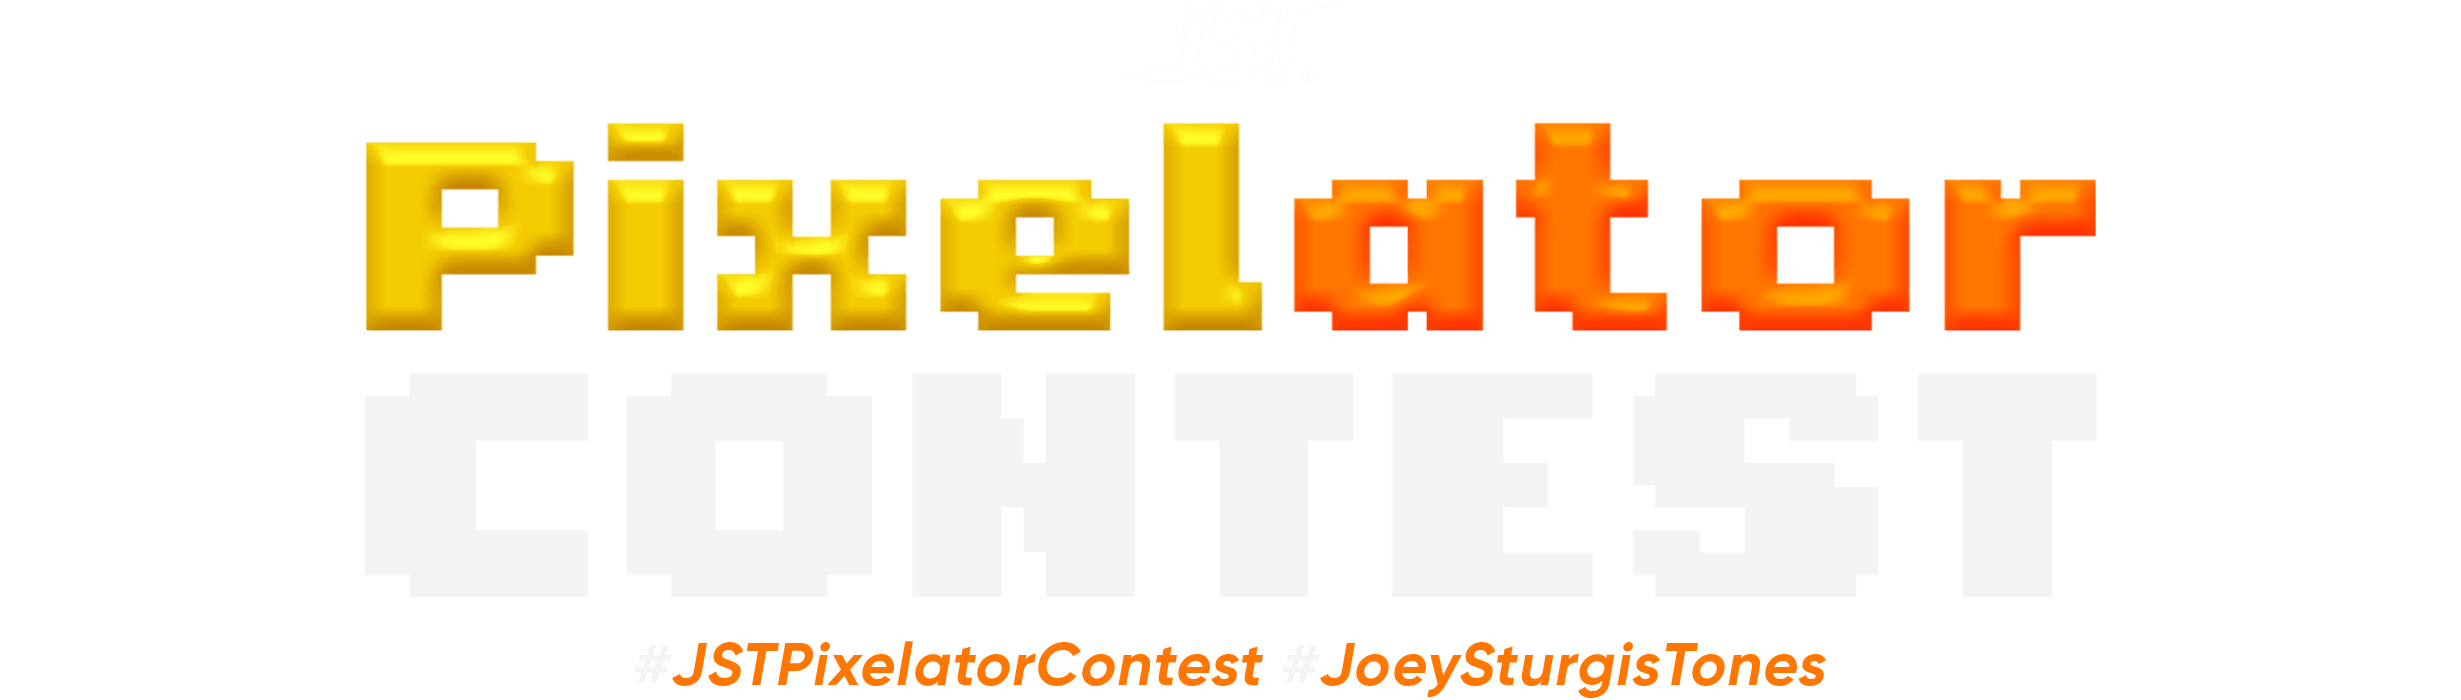 JST Pixelator Contest Logo